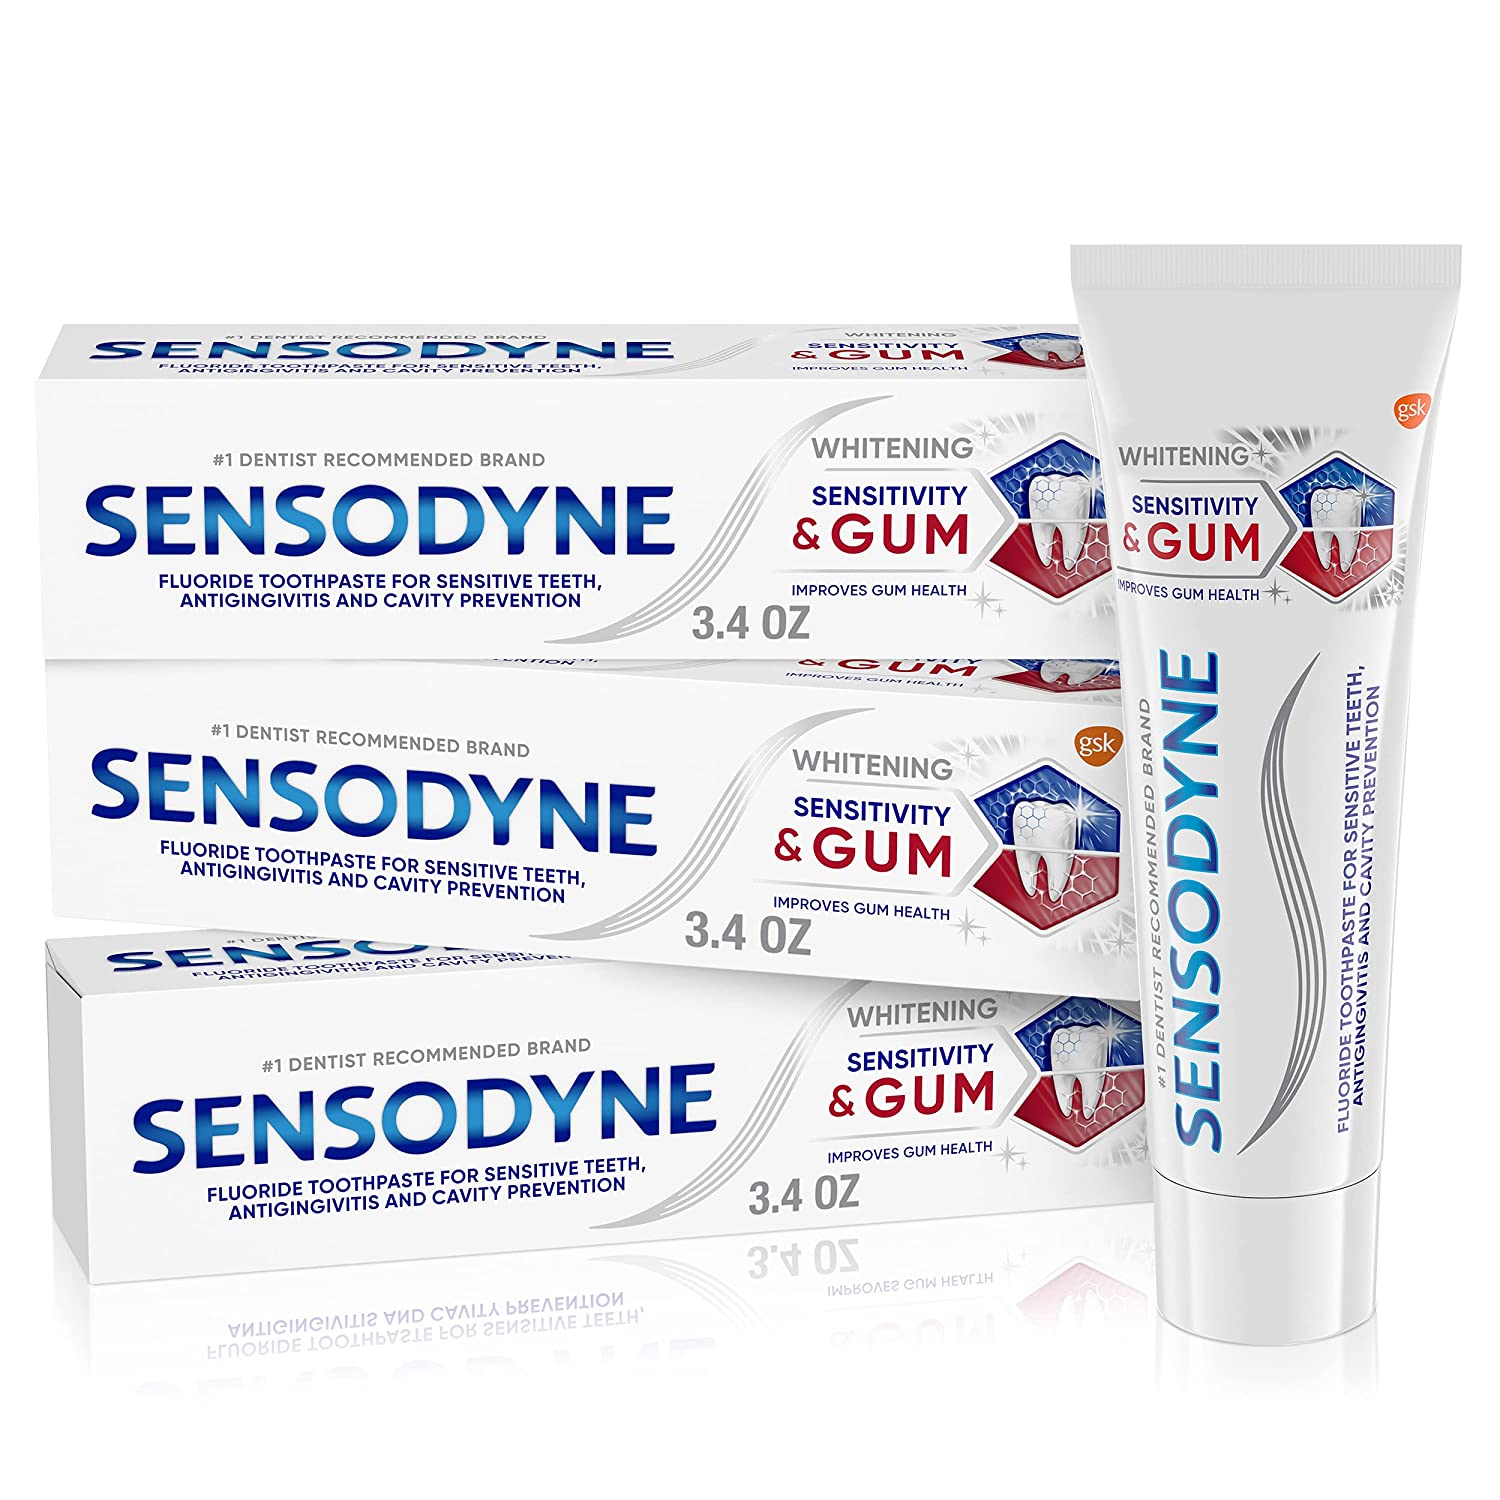 3-Pack 3.4-Oz Sensodyne Sensitivity & Gum Whitening Toothpaste $8.50 ($2.84 each) w/ S&S + Free Shipping w/ Prime or on $25+